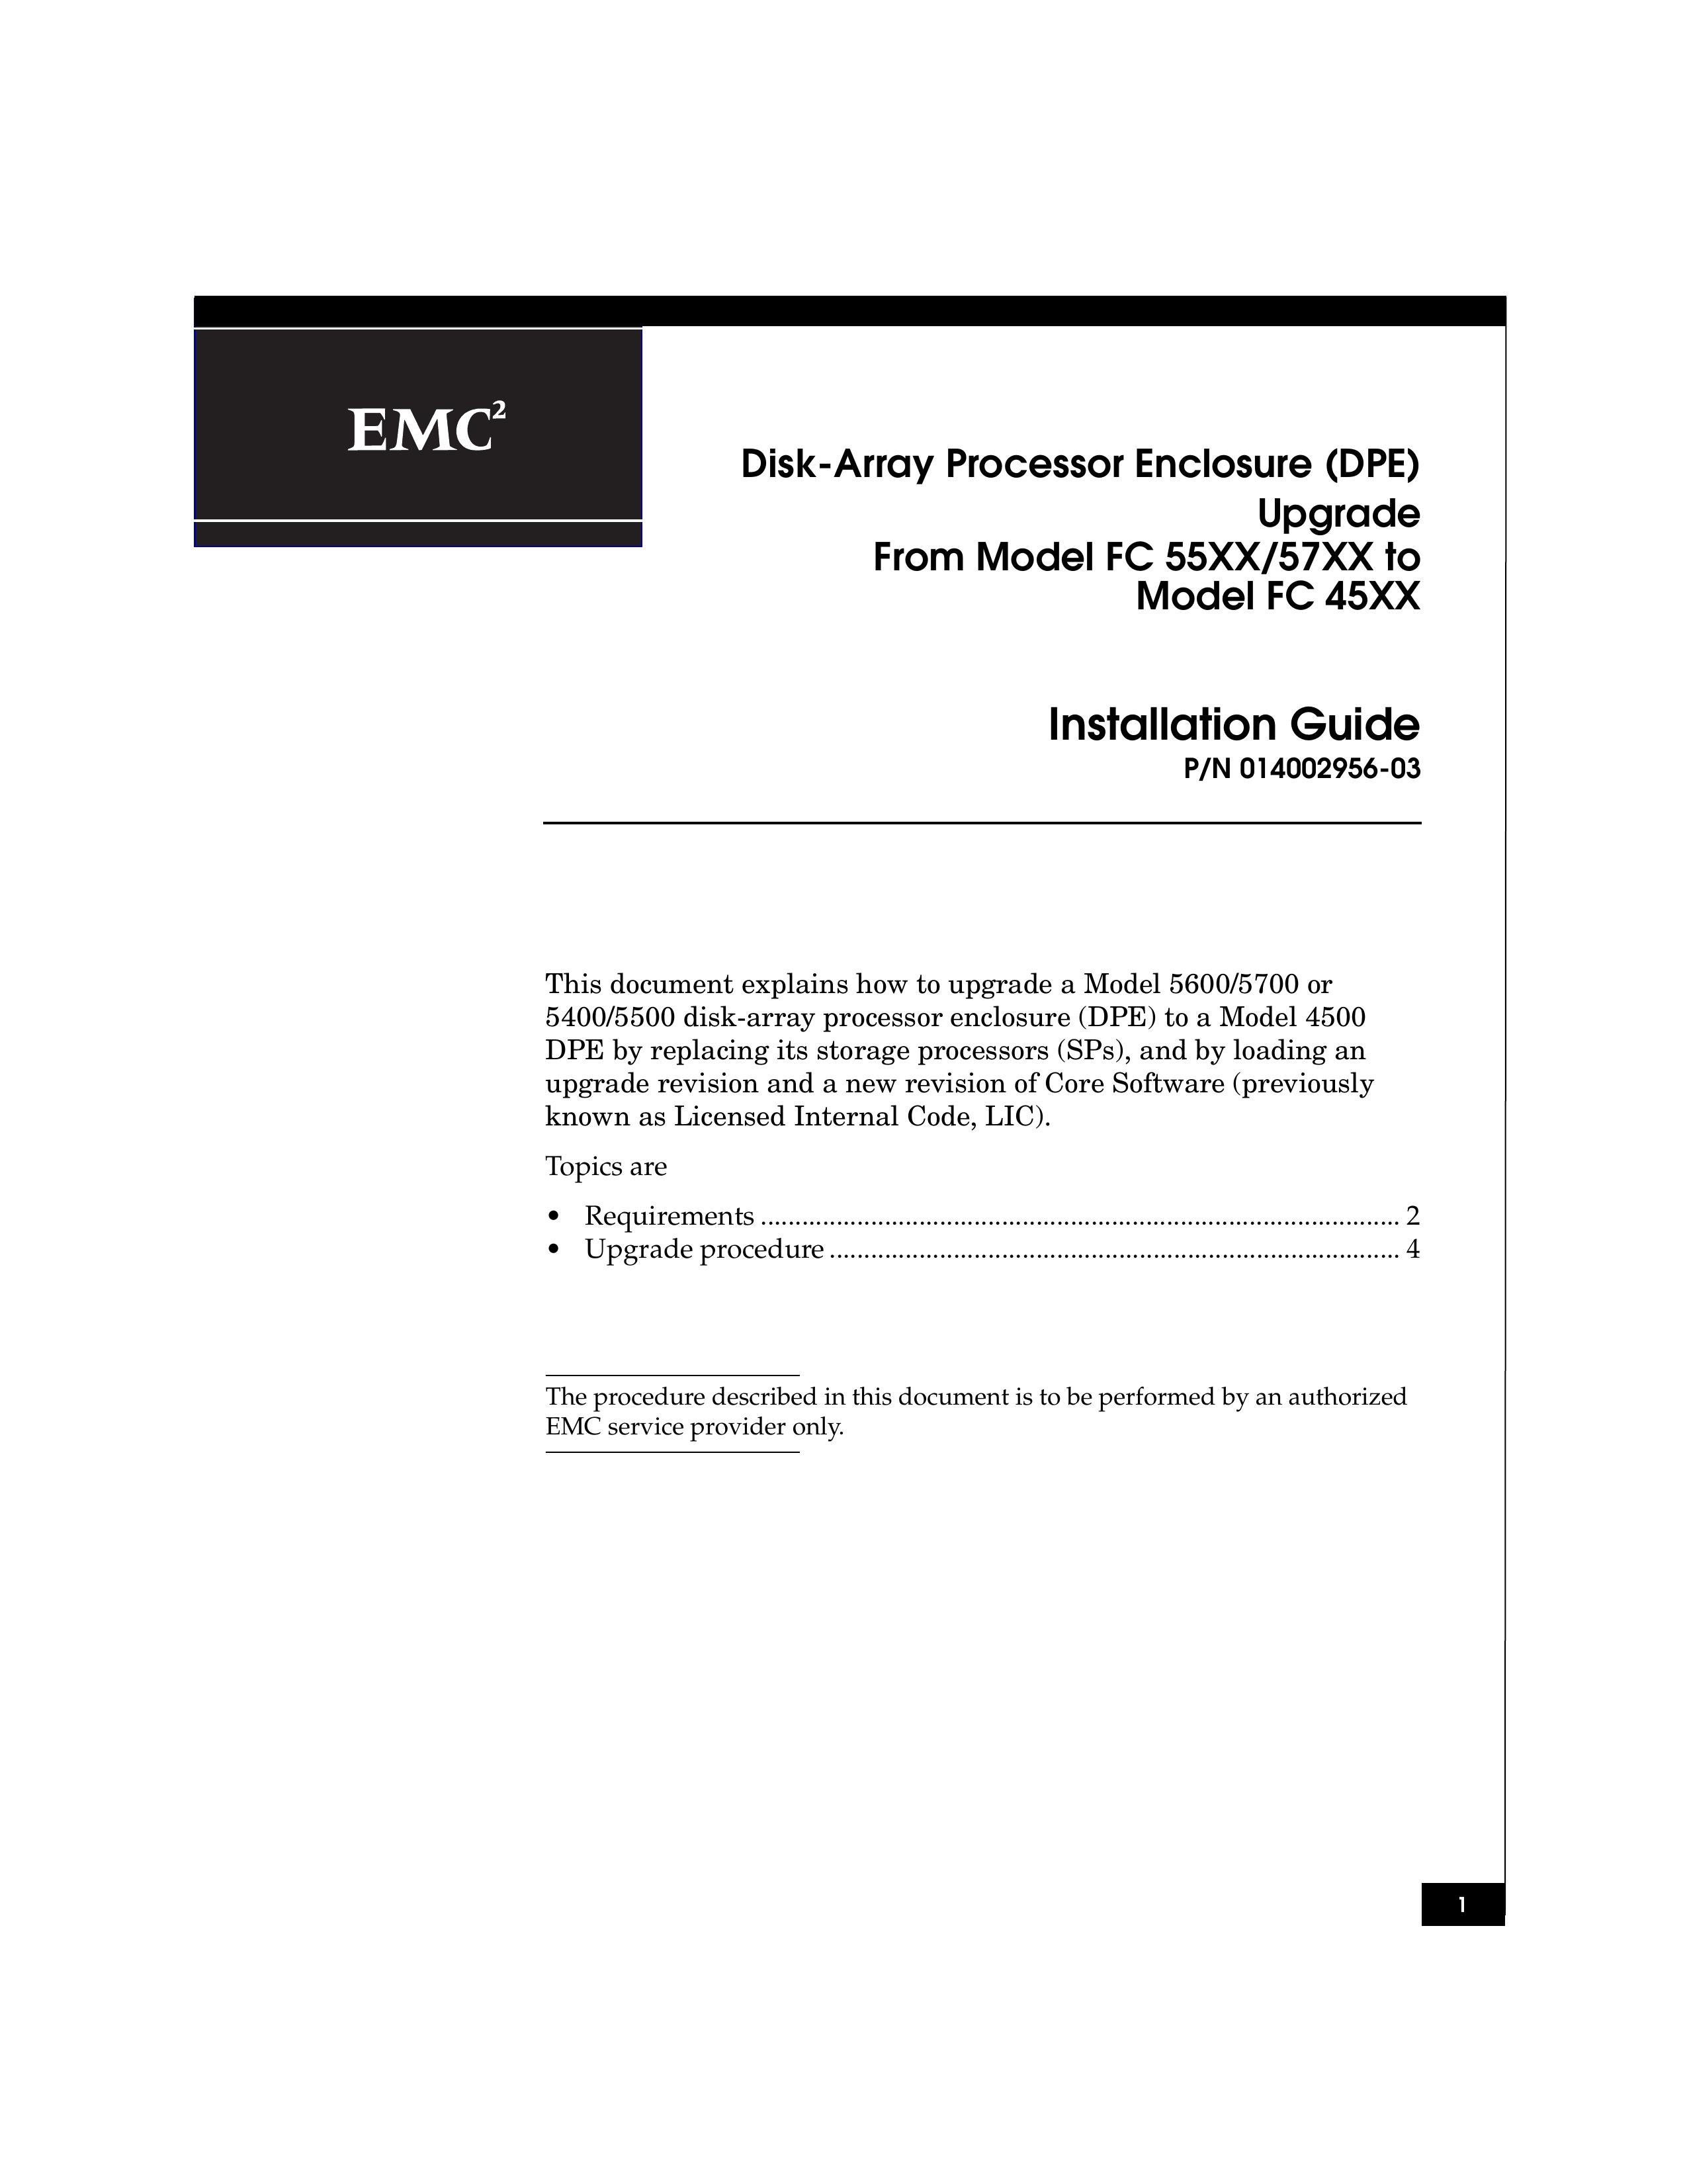 EMC FC 55XX/57XX Outboard Motor User Manual